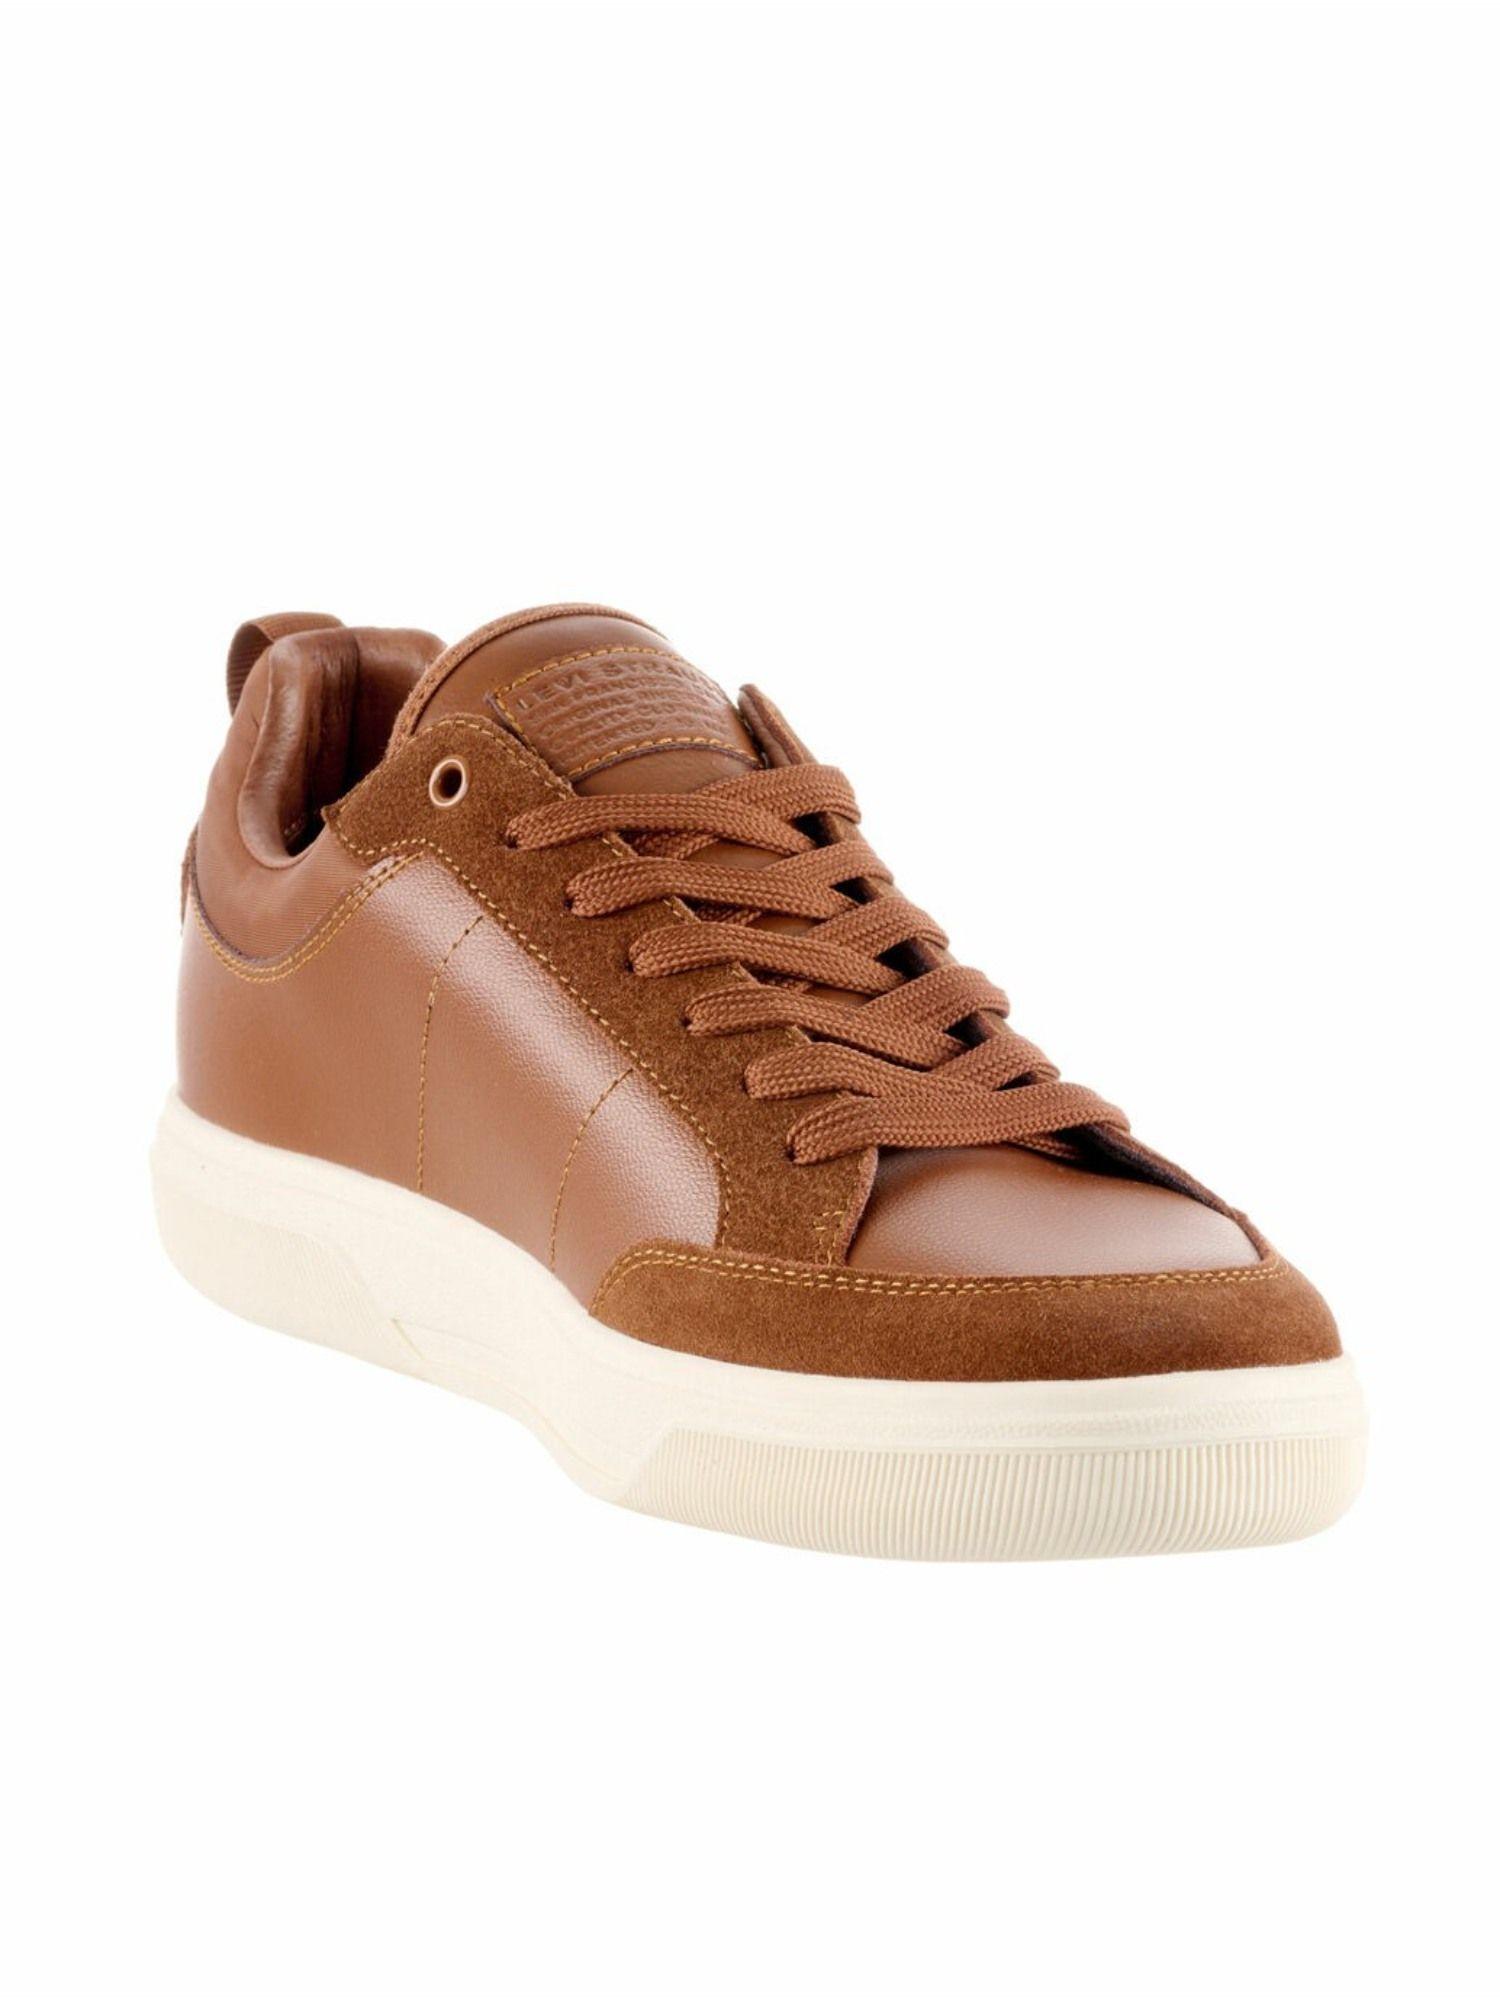 mens-cast-brown-plain-sneakers